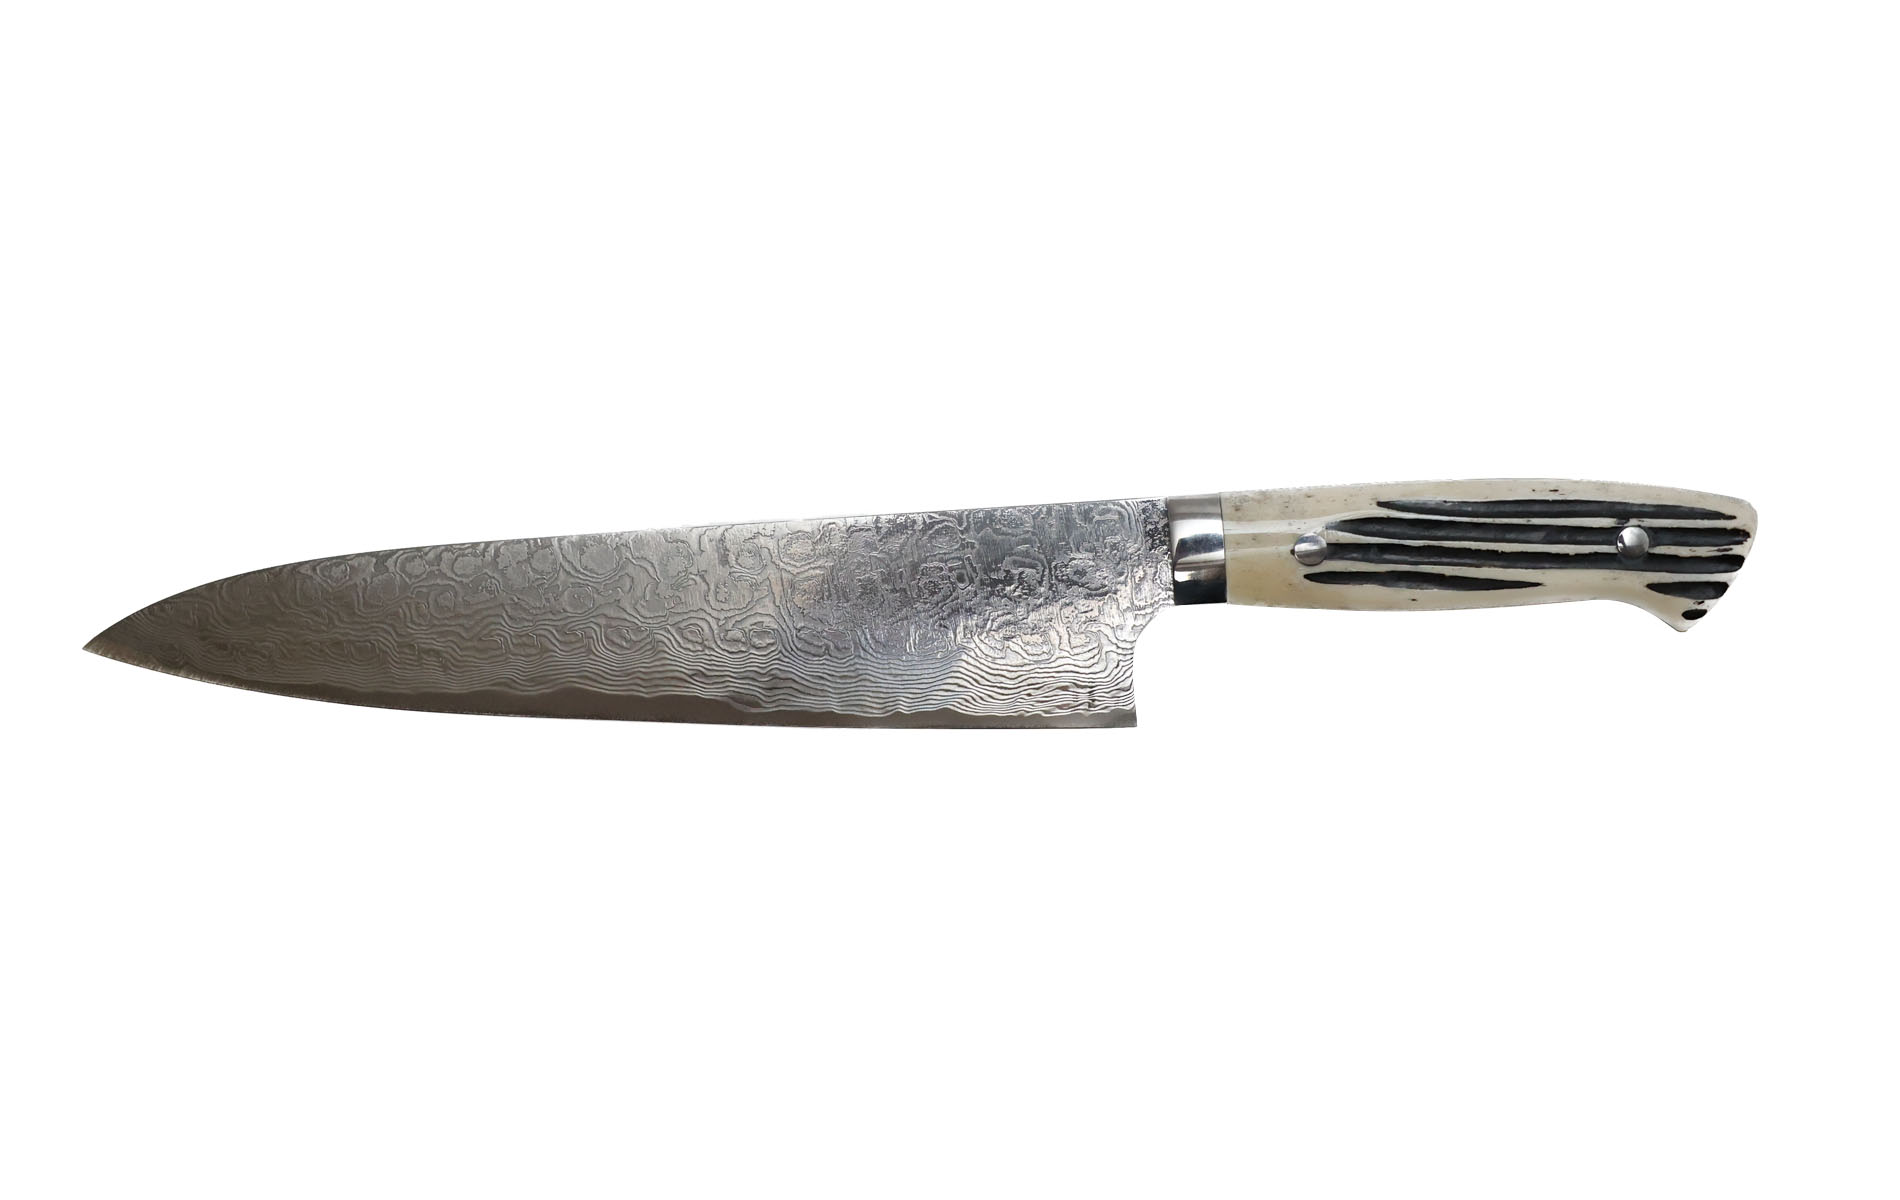 Couteau japonais artisanal SG-2 damas polish de Takeshi Saji - Couteau gyuto 24 cm